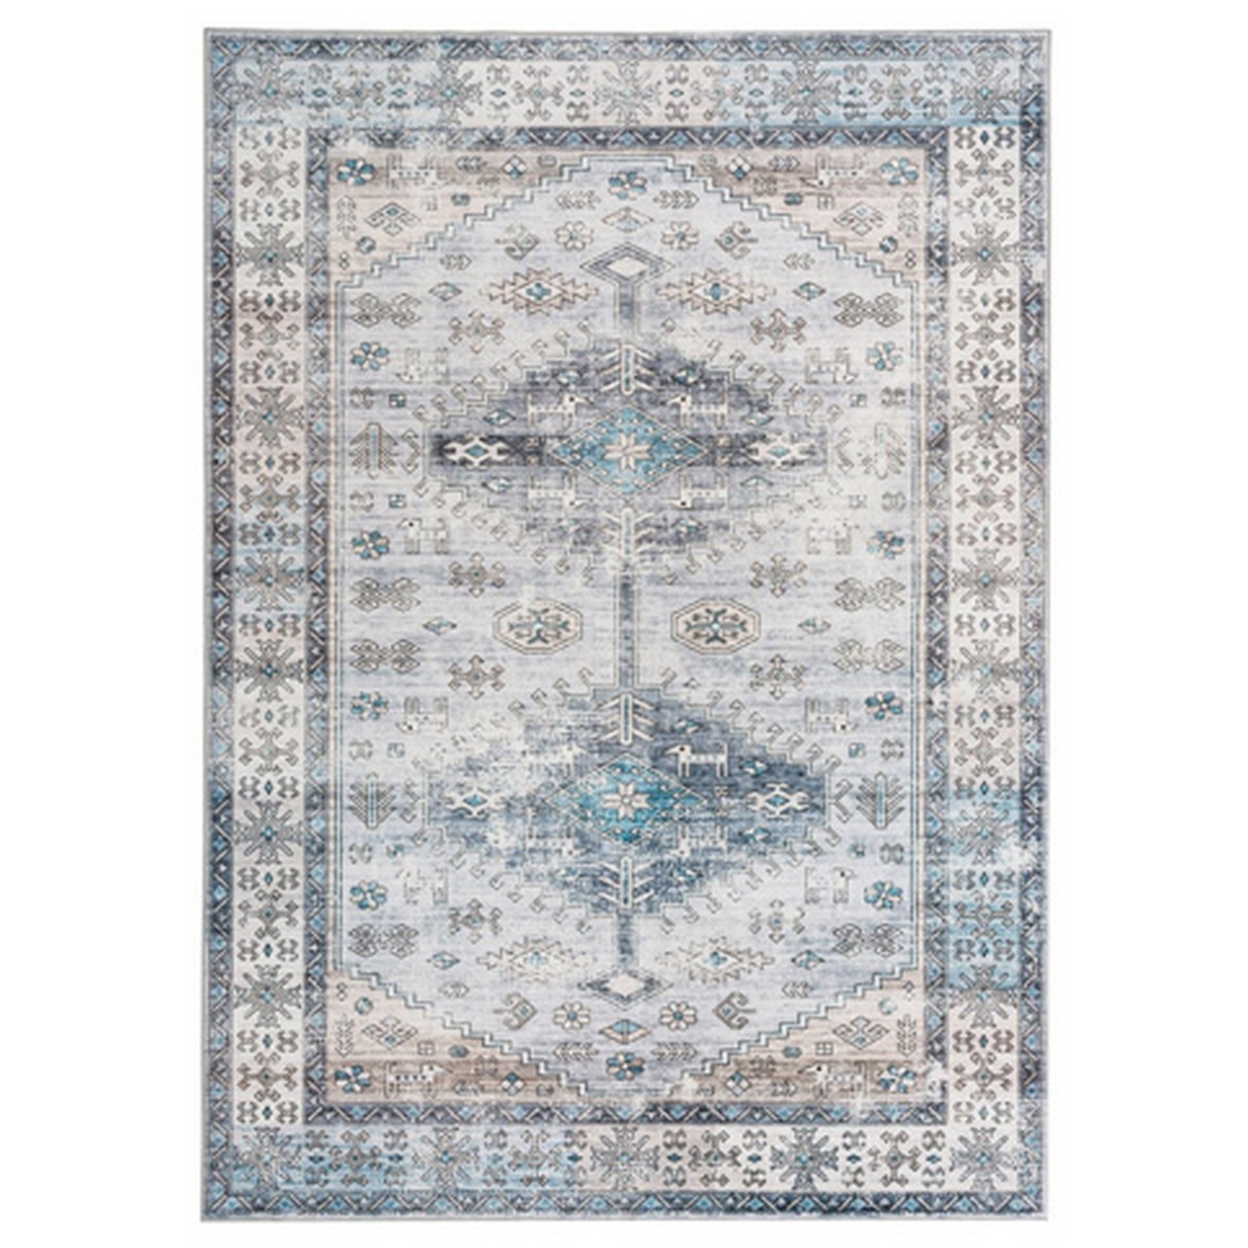 Nyx 7 X 5 Medium Soft Fabric Floor Area Rug, Vintage Blue Border Design- Saltoro Sherpi